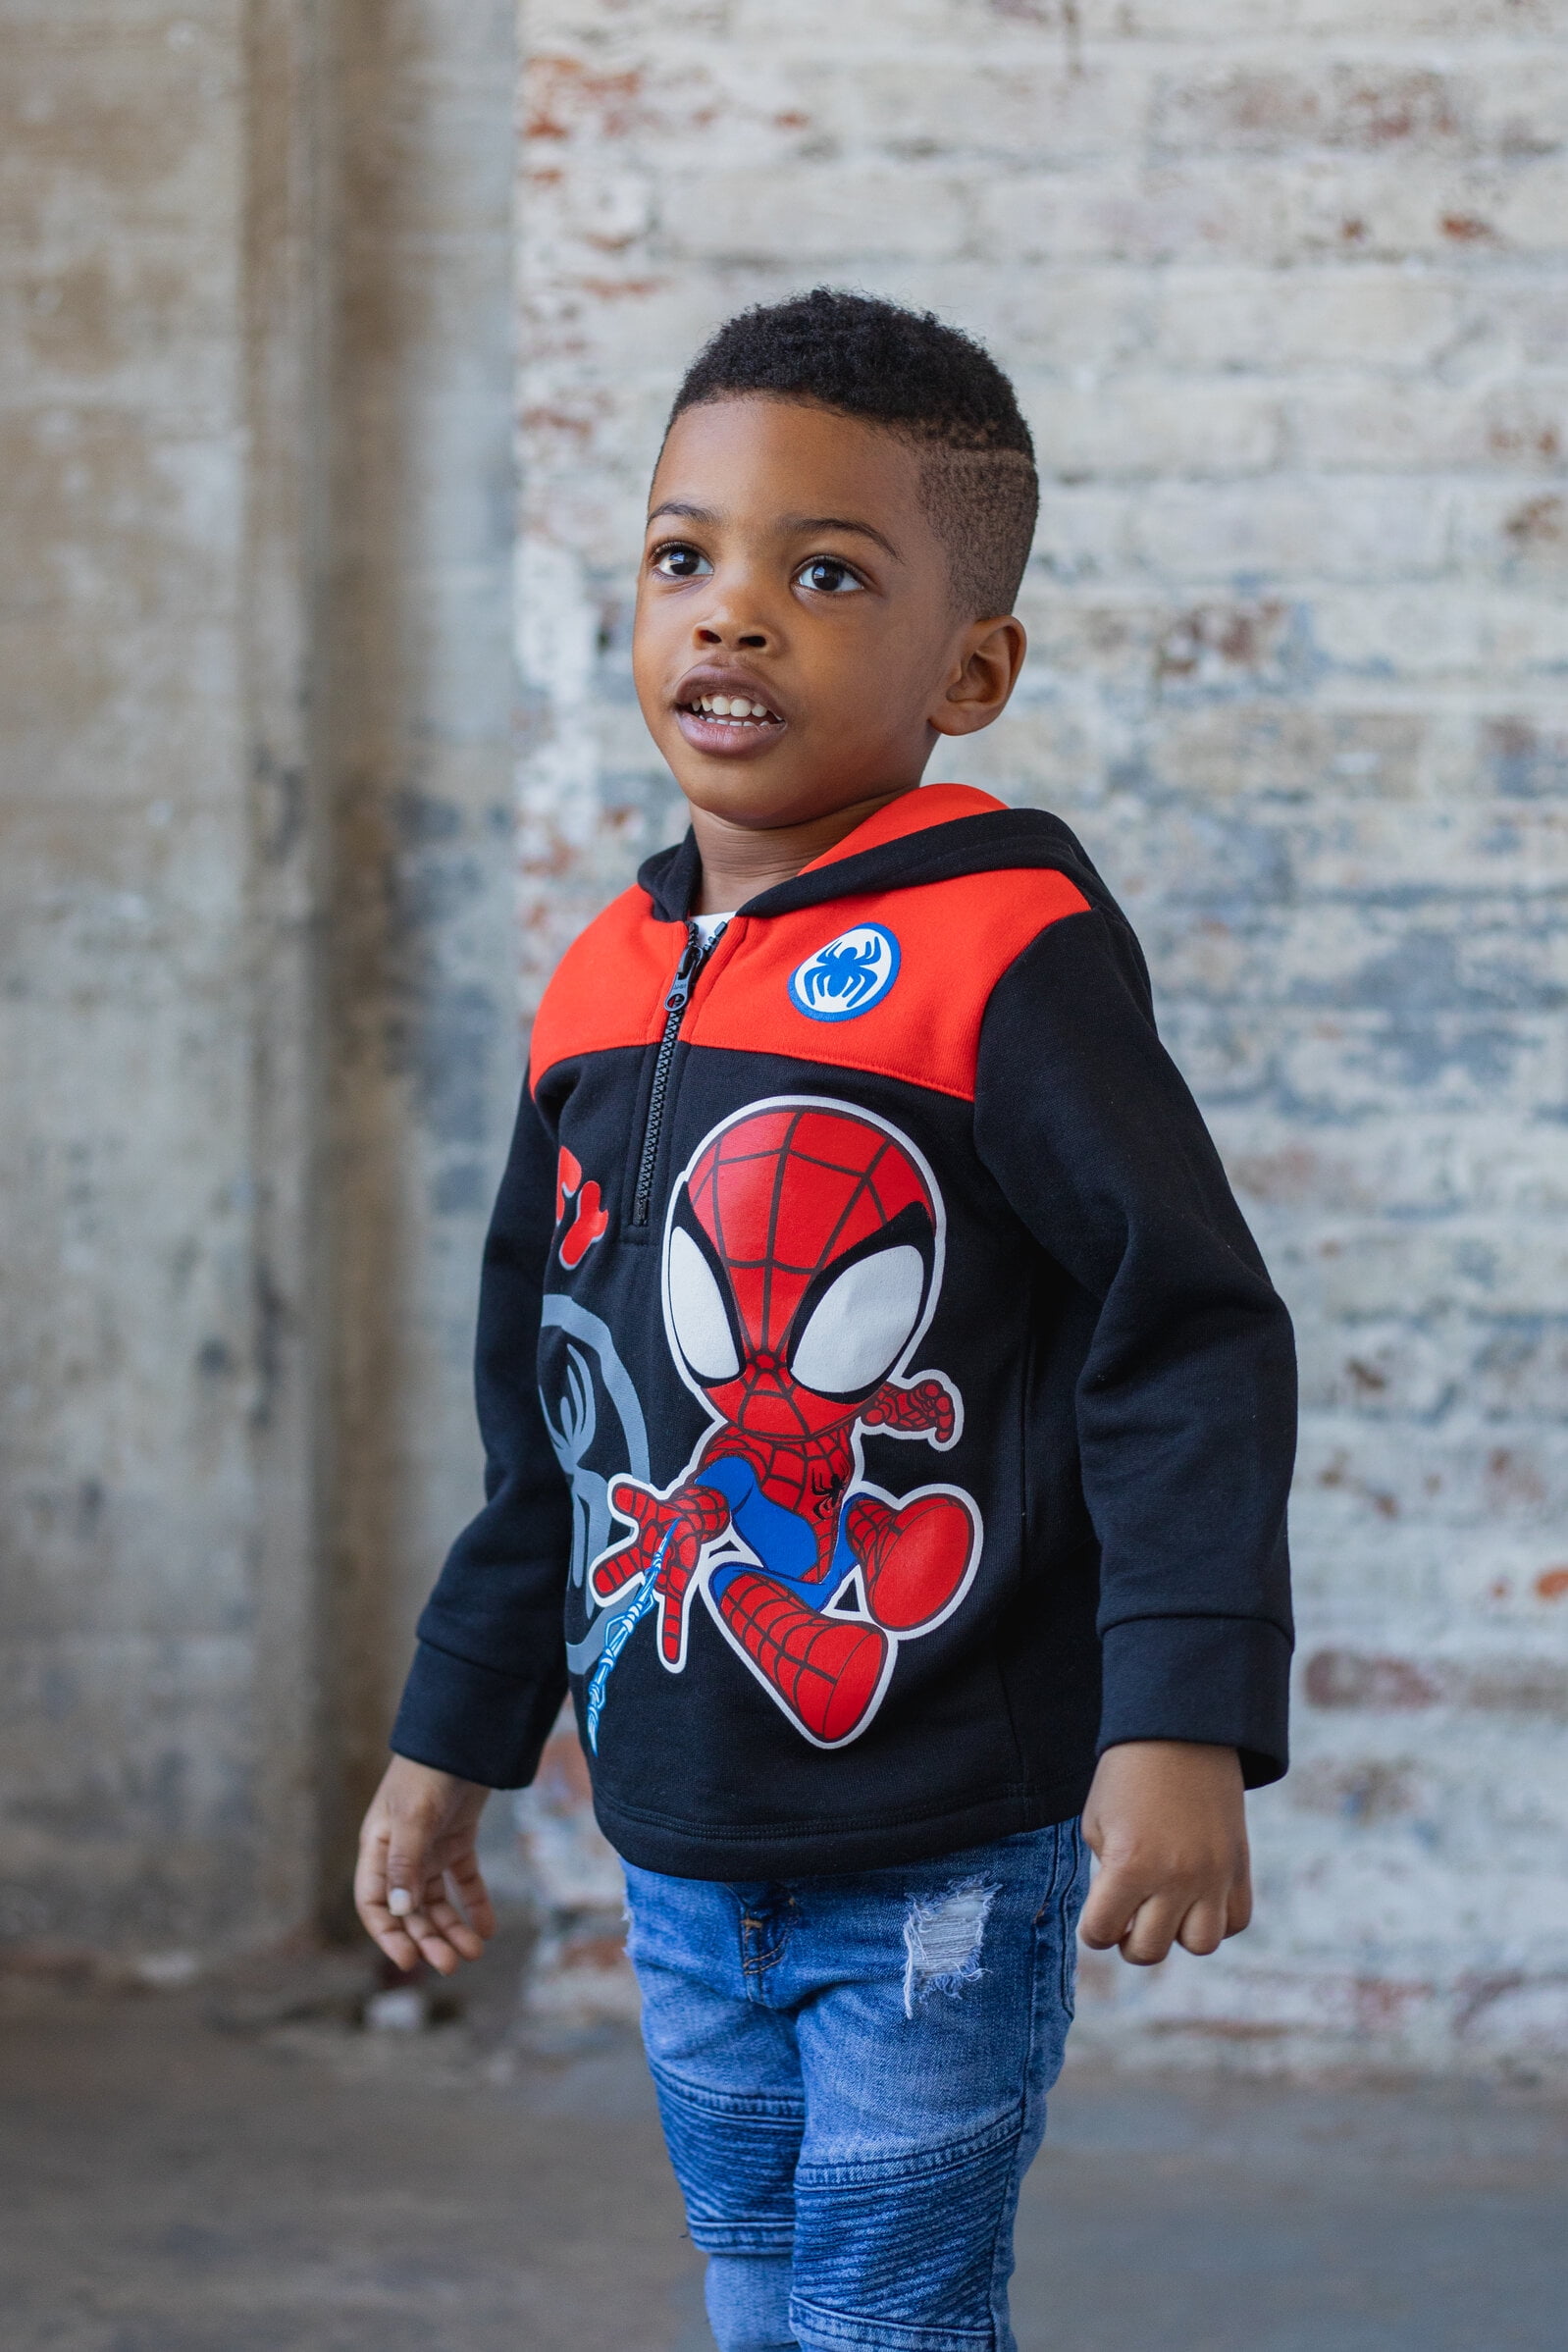 Marvel Boys' Spiderman Costume Hoodie (Toddler Boys & Little Boys